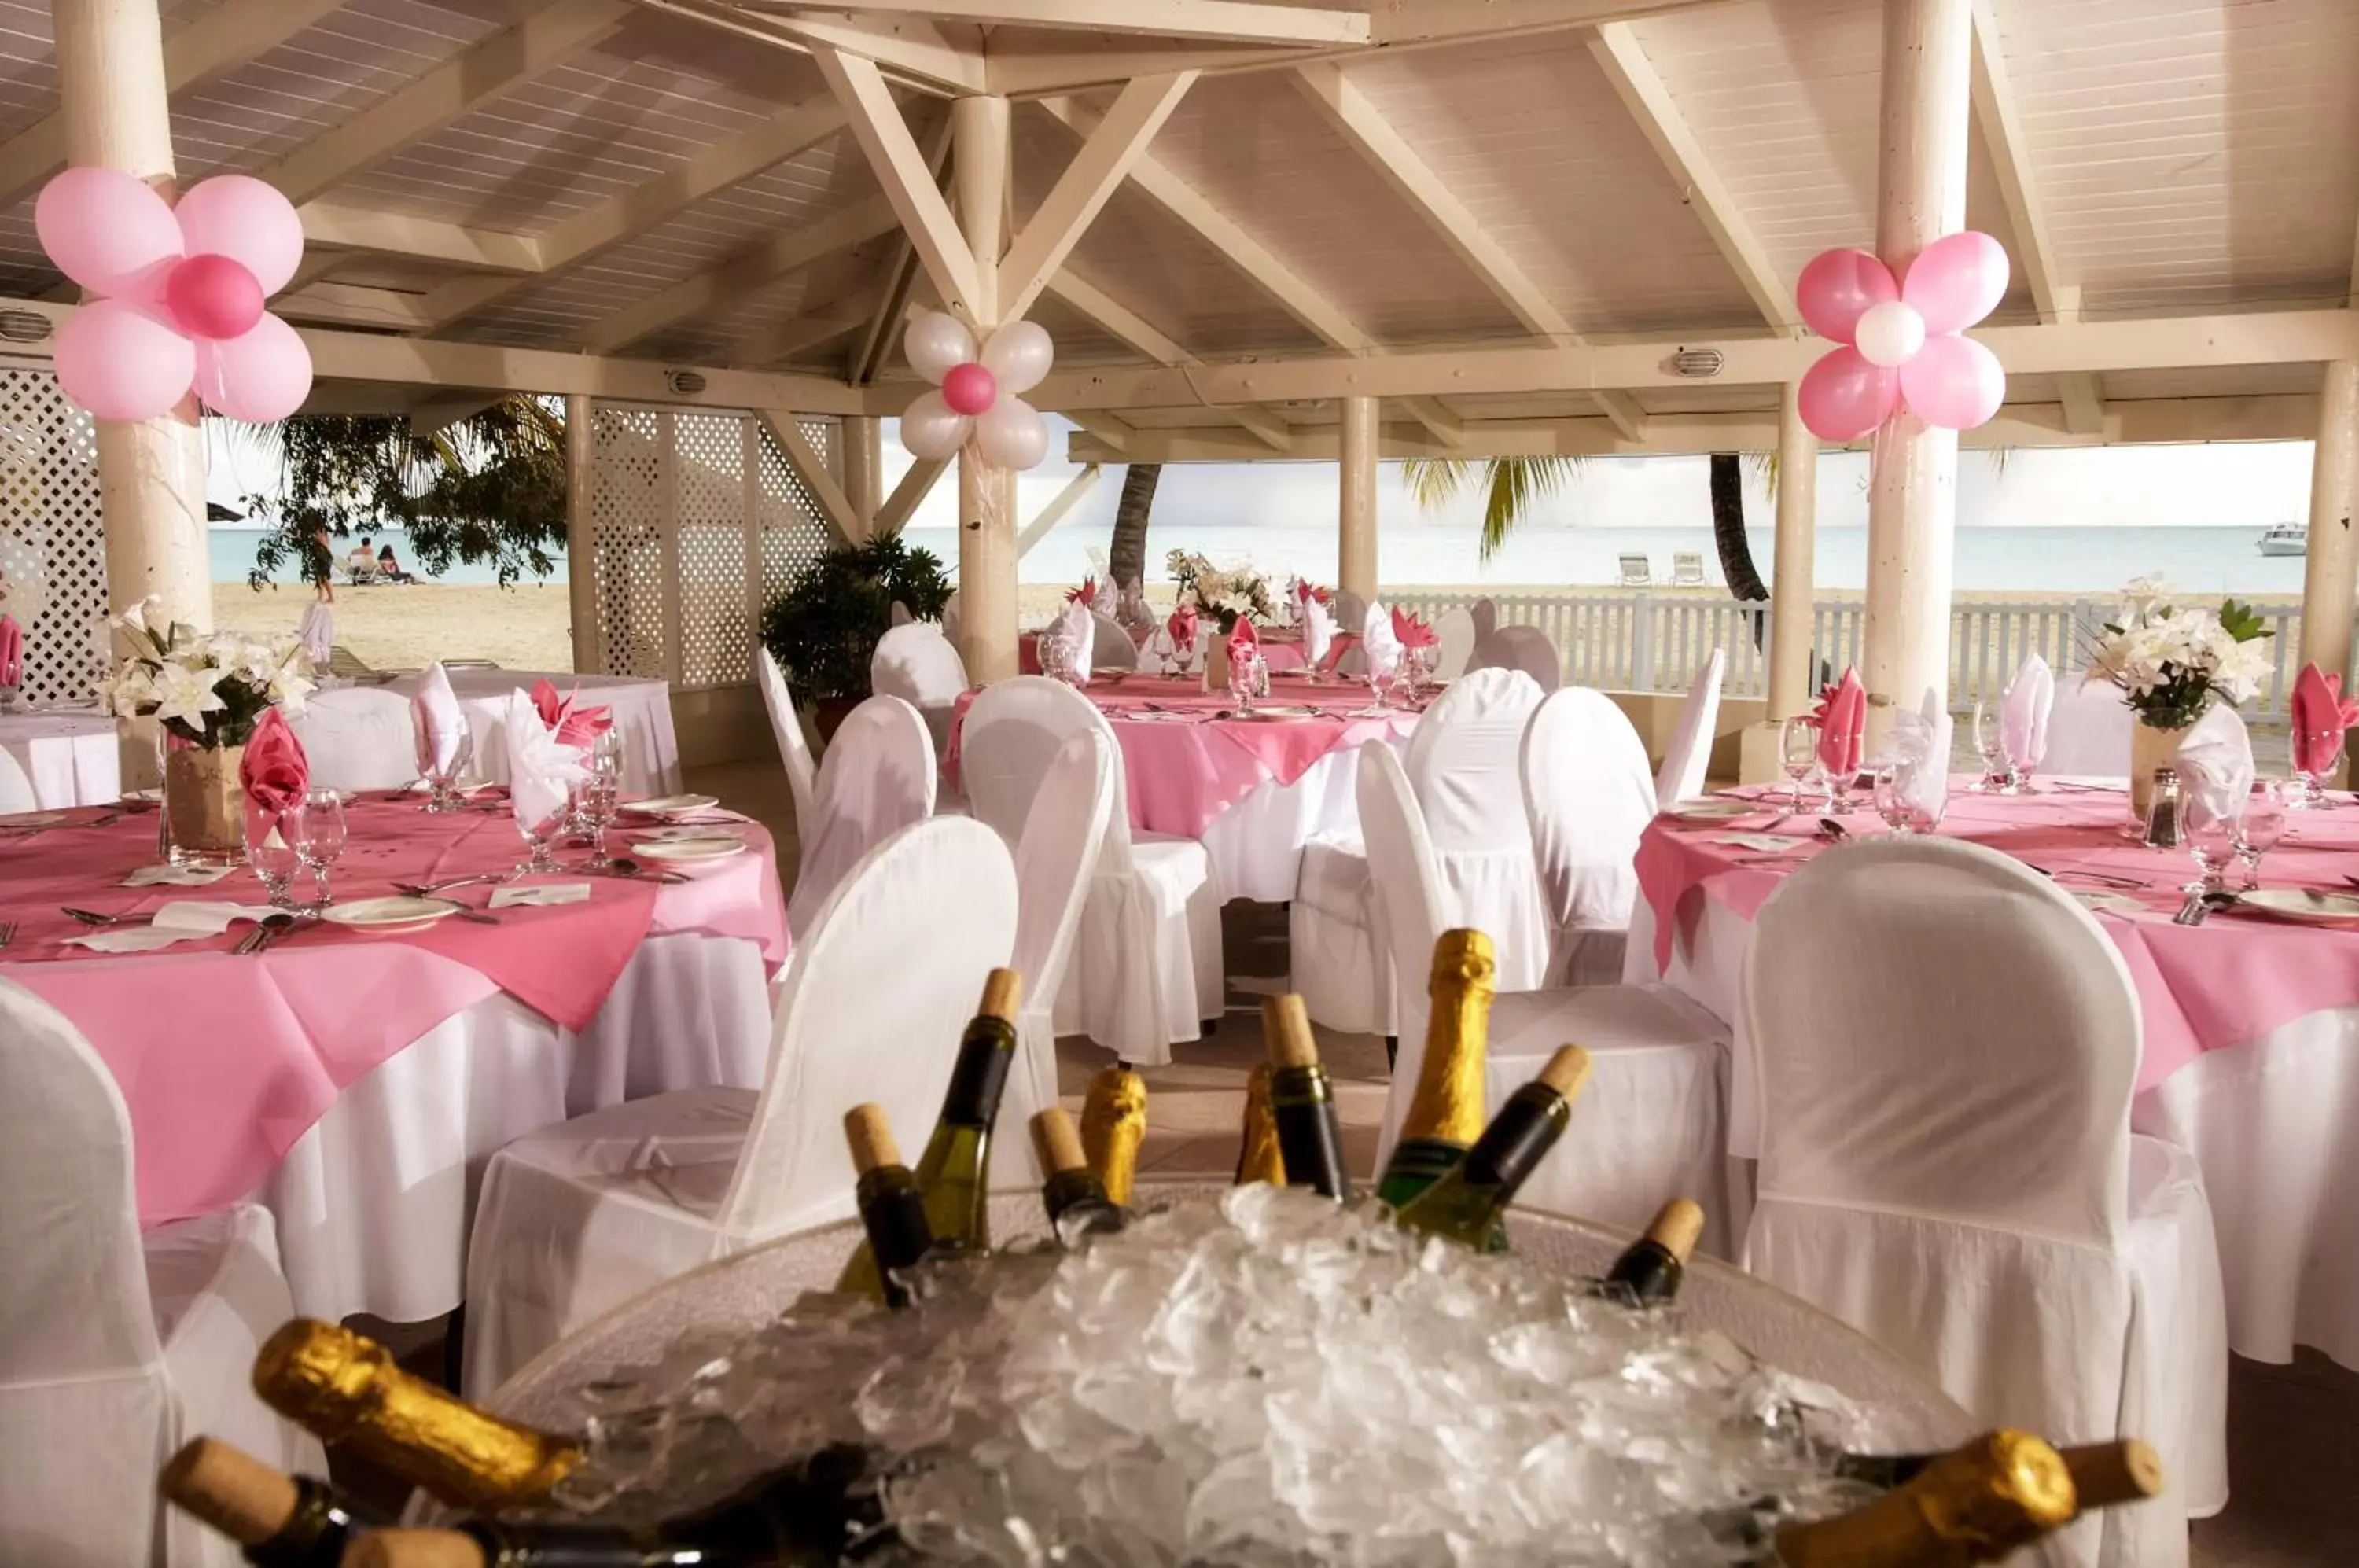 Banquet/Function facilities, Banquet Facilities in Jolly Beach Antigua - All Inclusive